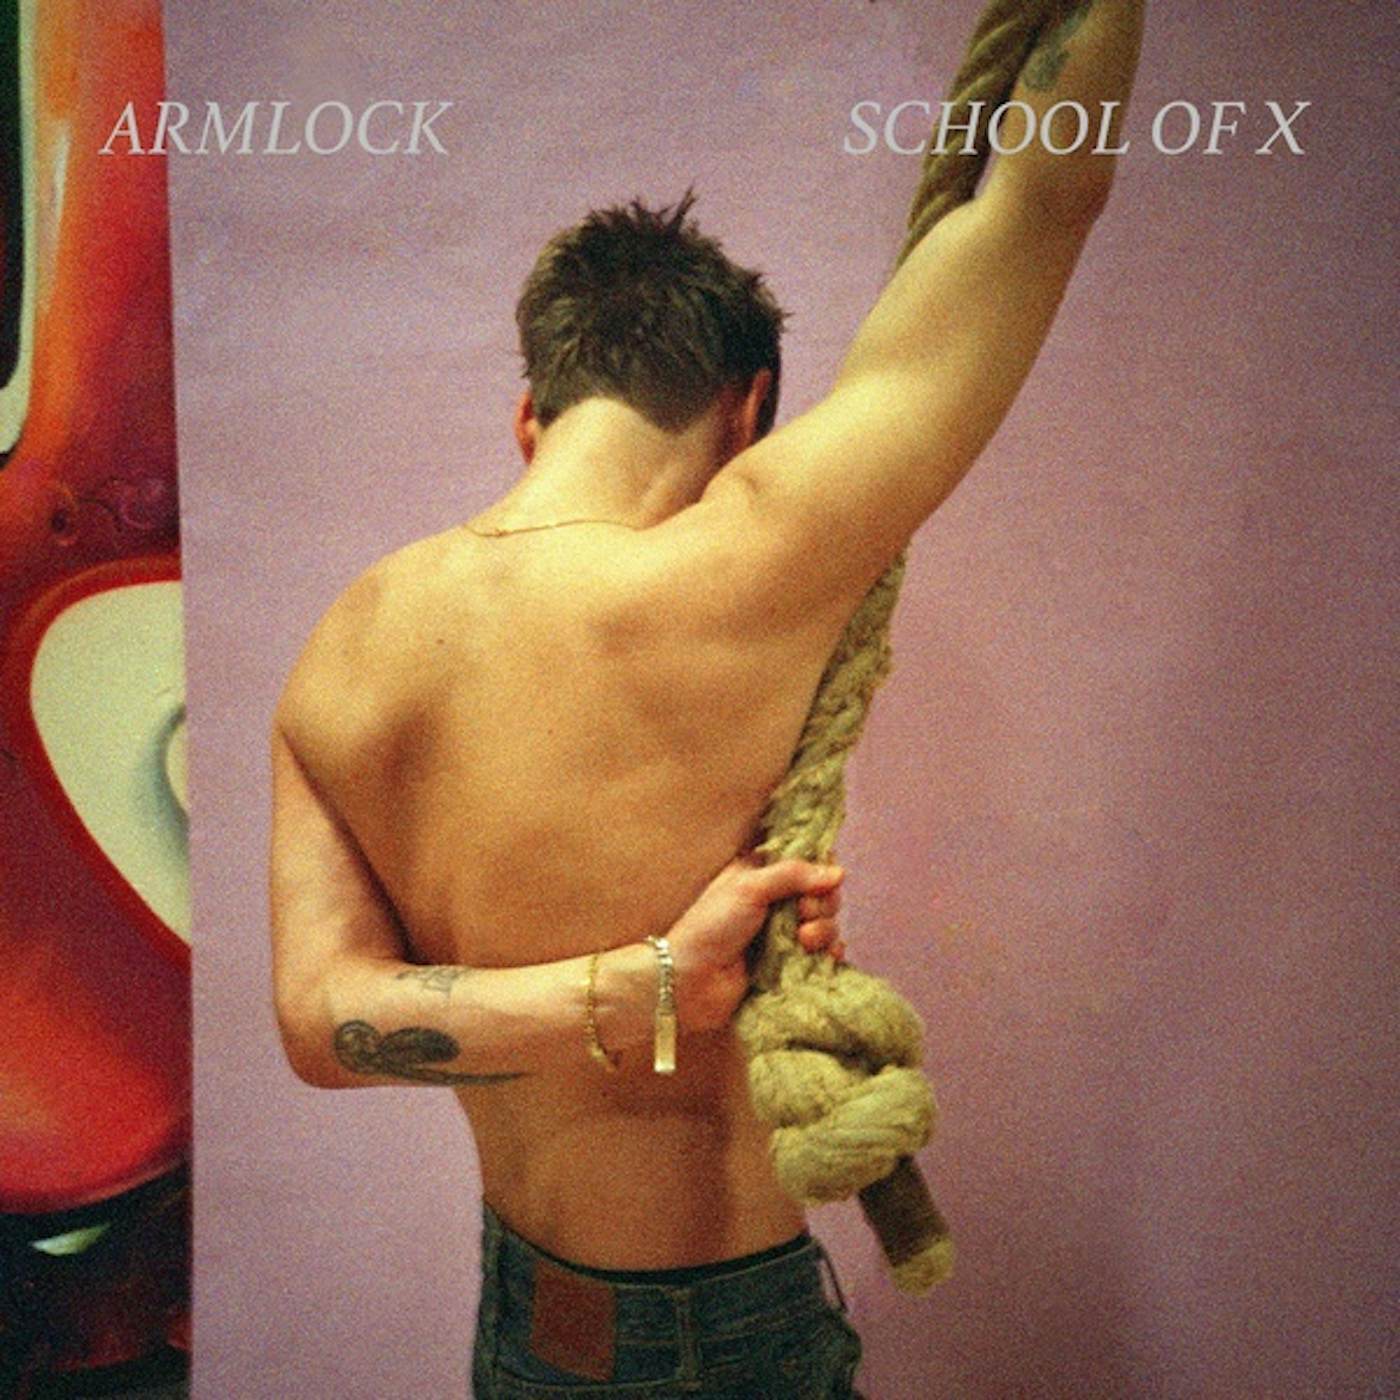 School of X Armlock Vinyl Record